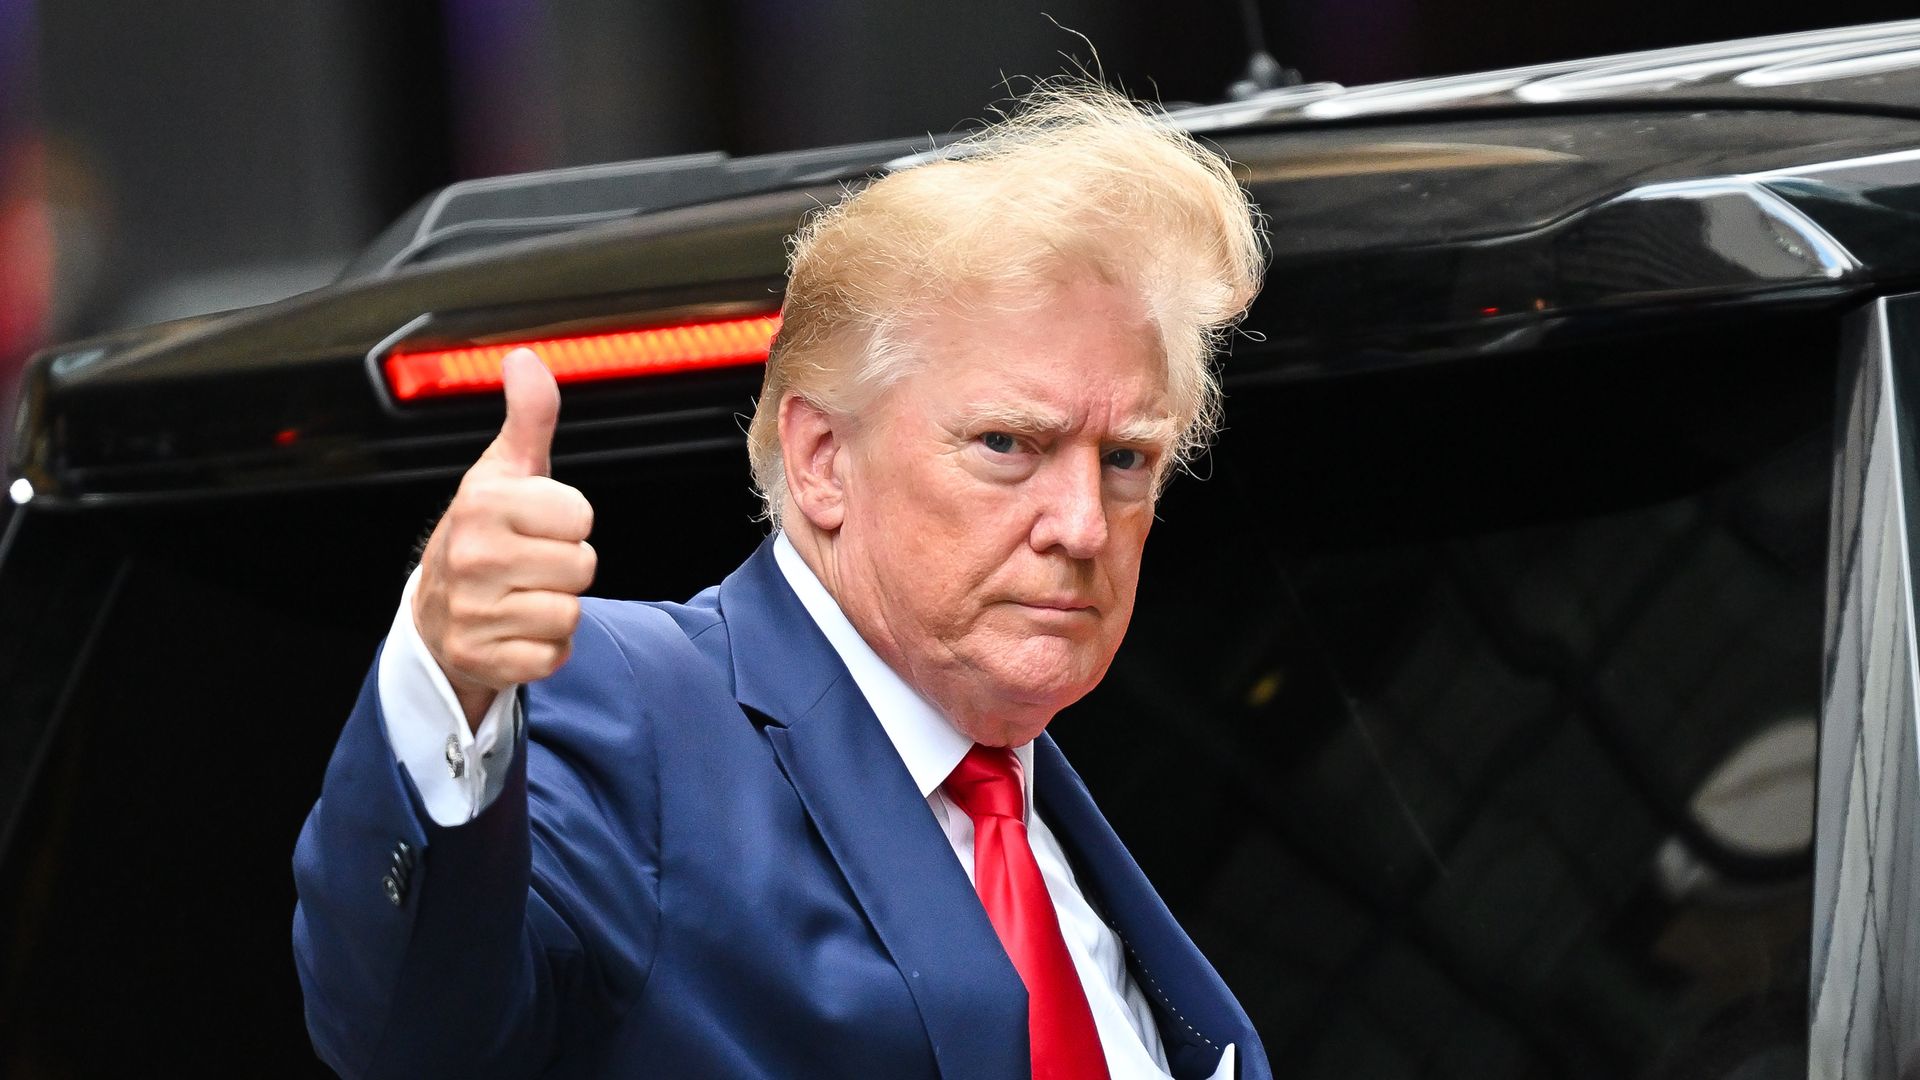 Donald Trump leaves Trump Tower 